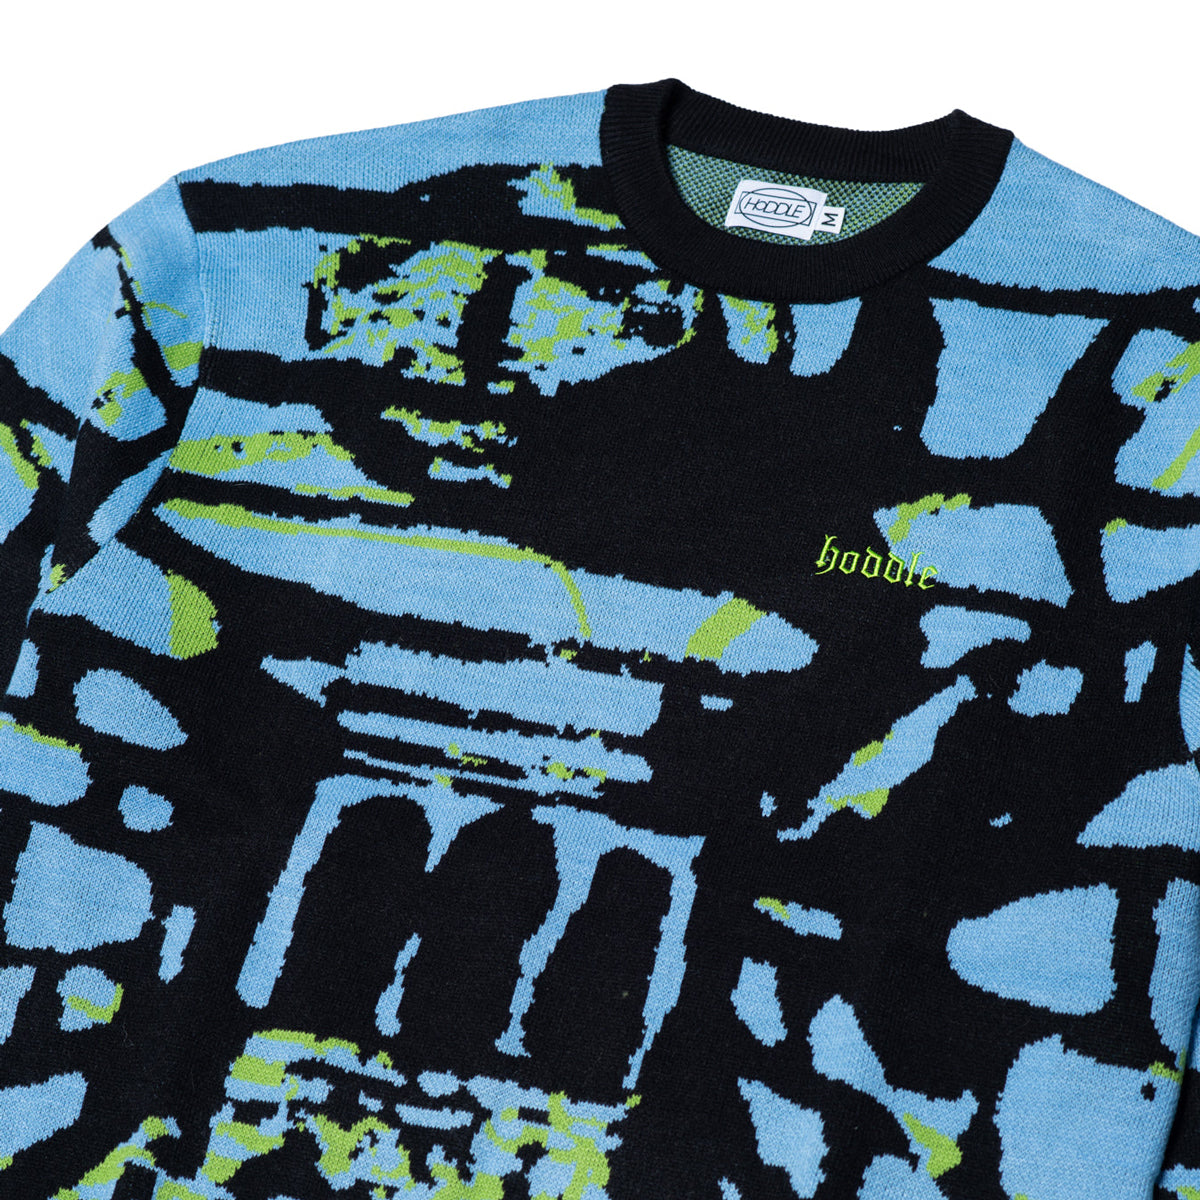 Hoddle Dungieon Knit Shirt - Blue/Black/Green image 3